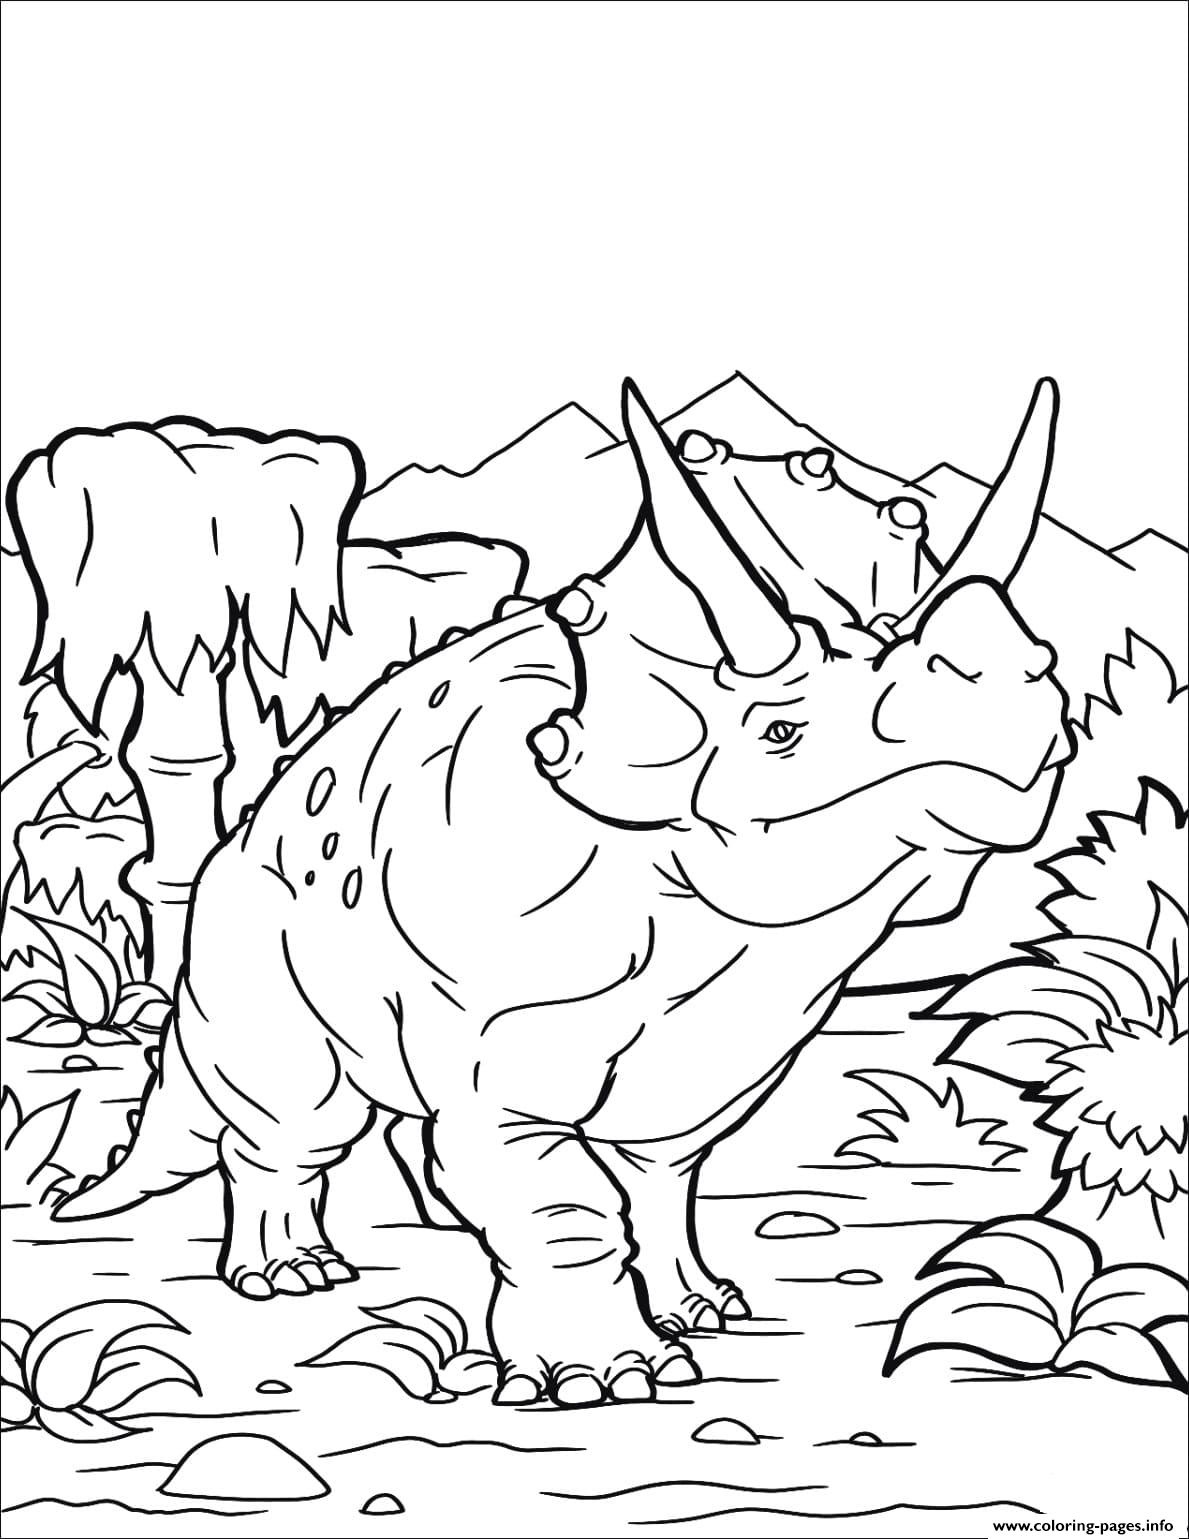 Triceratops Dinosaur coloring